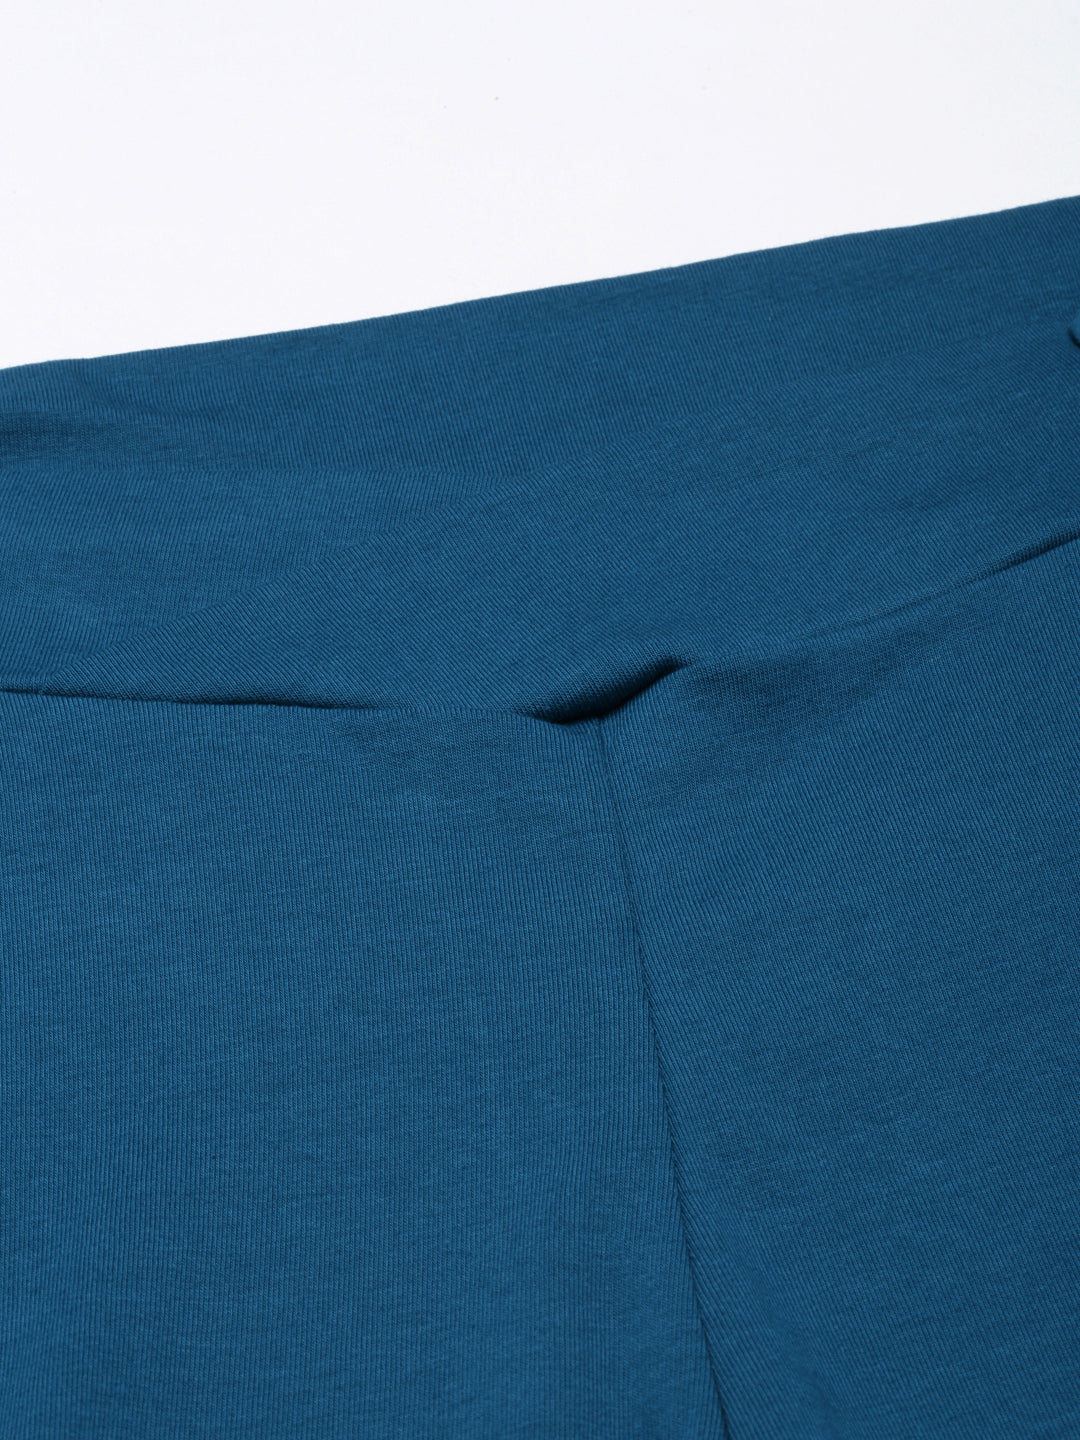 Maternity Comfy Pant Midnight Blue - Adjustable waist